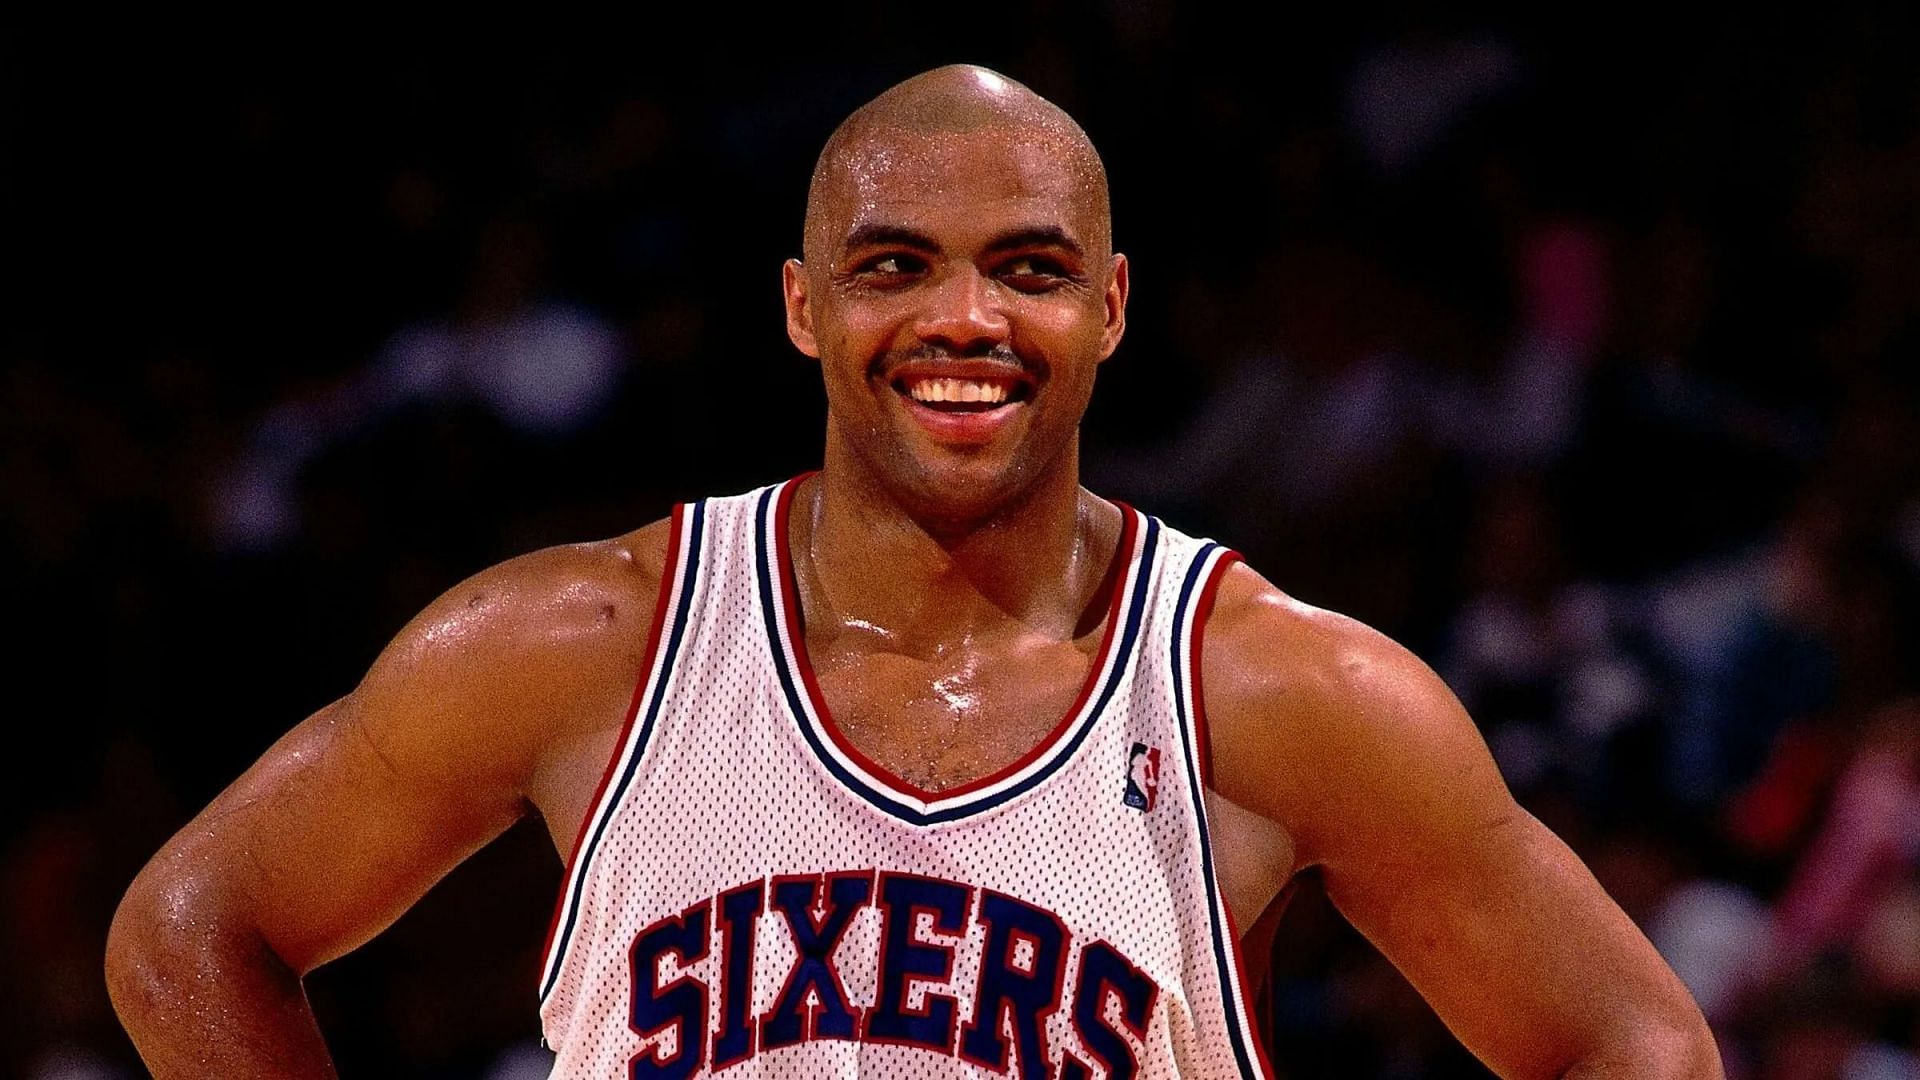 Barkley played 16 seasons in his NBA career